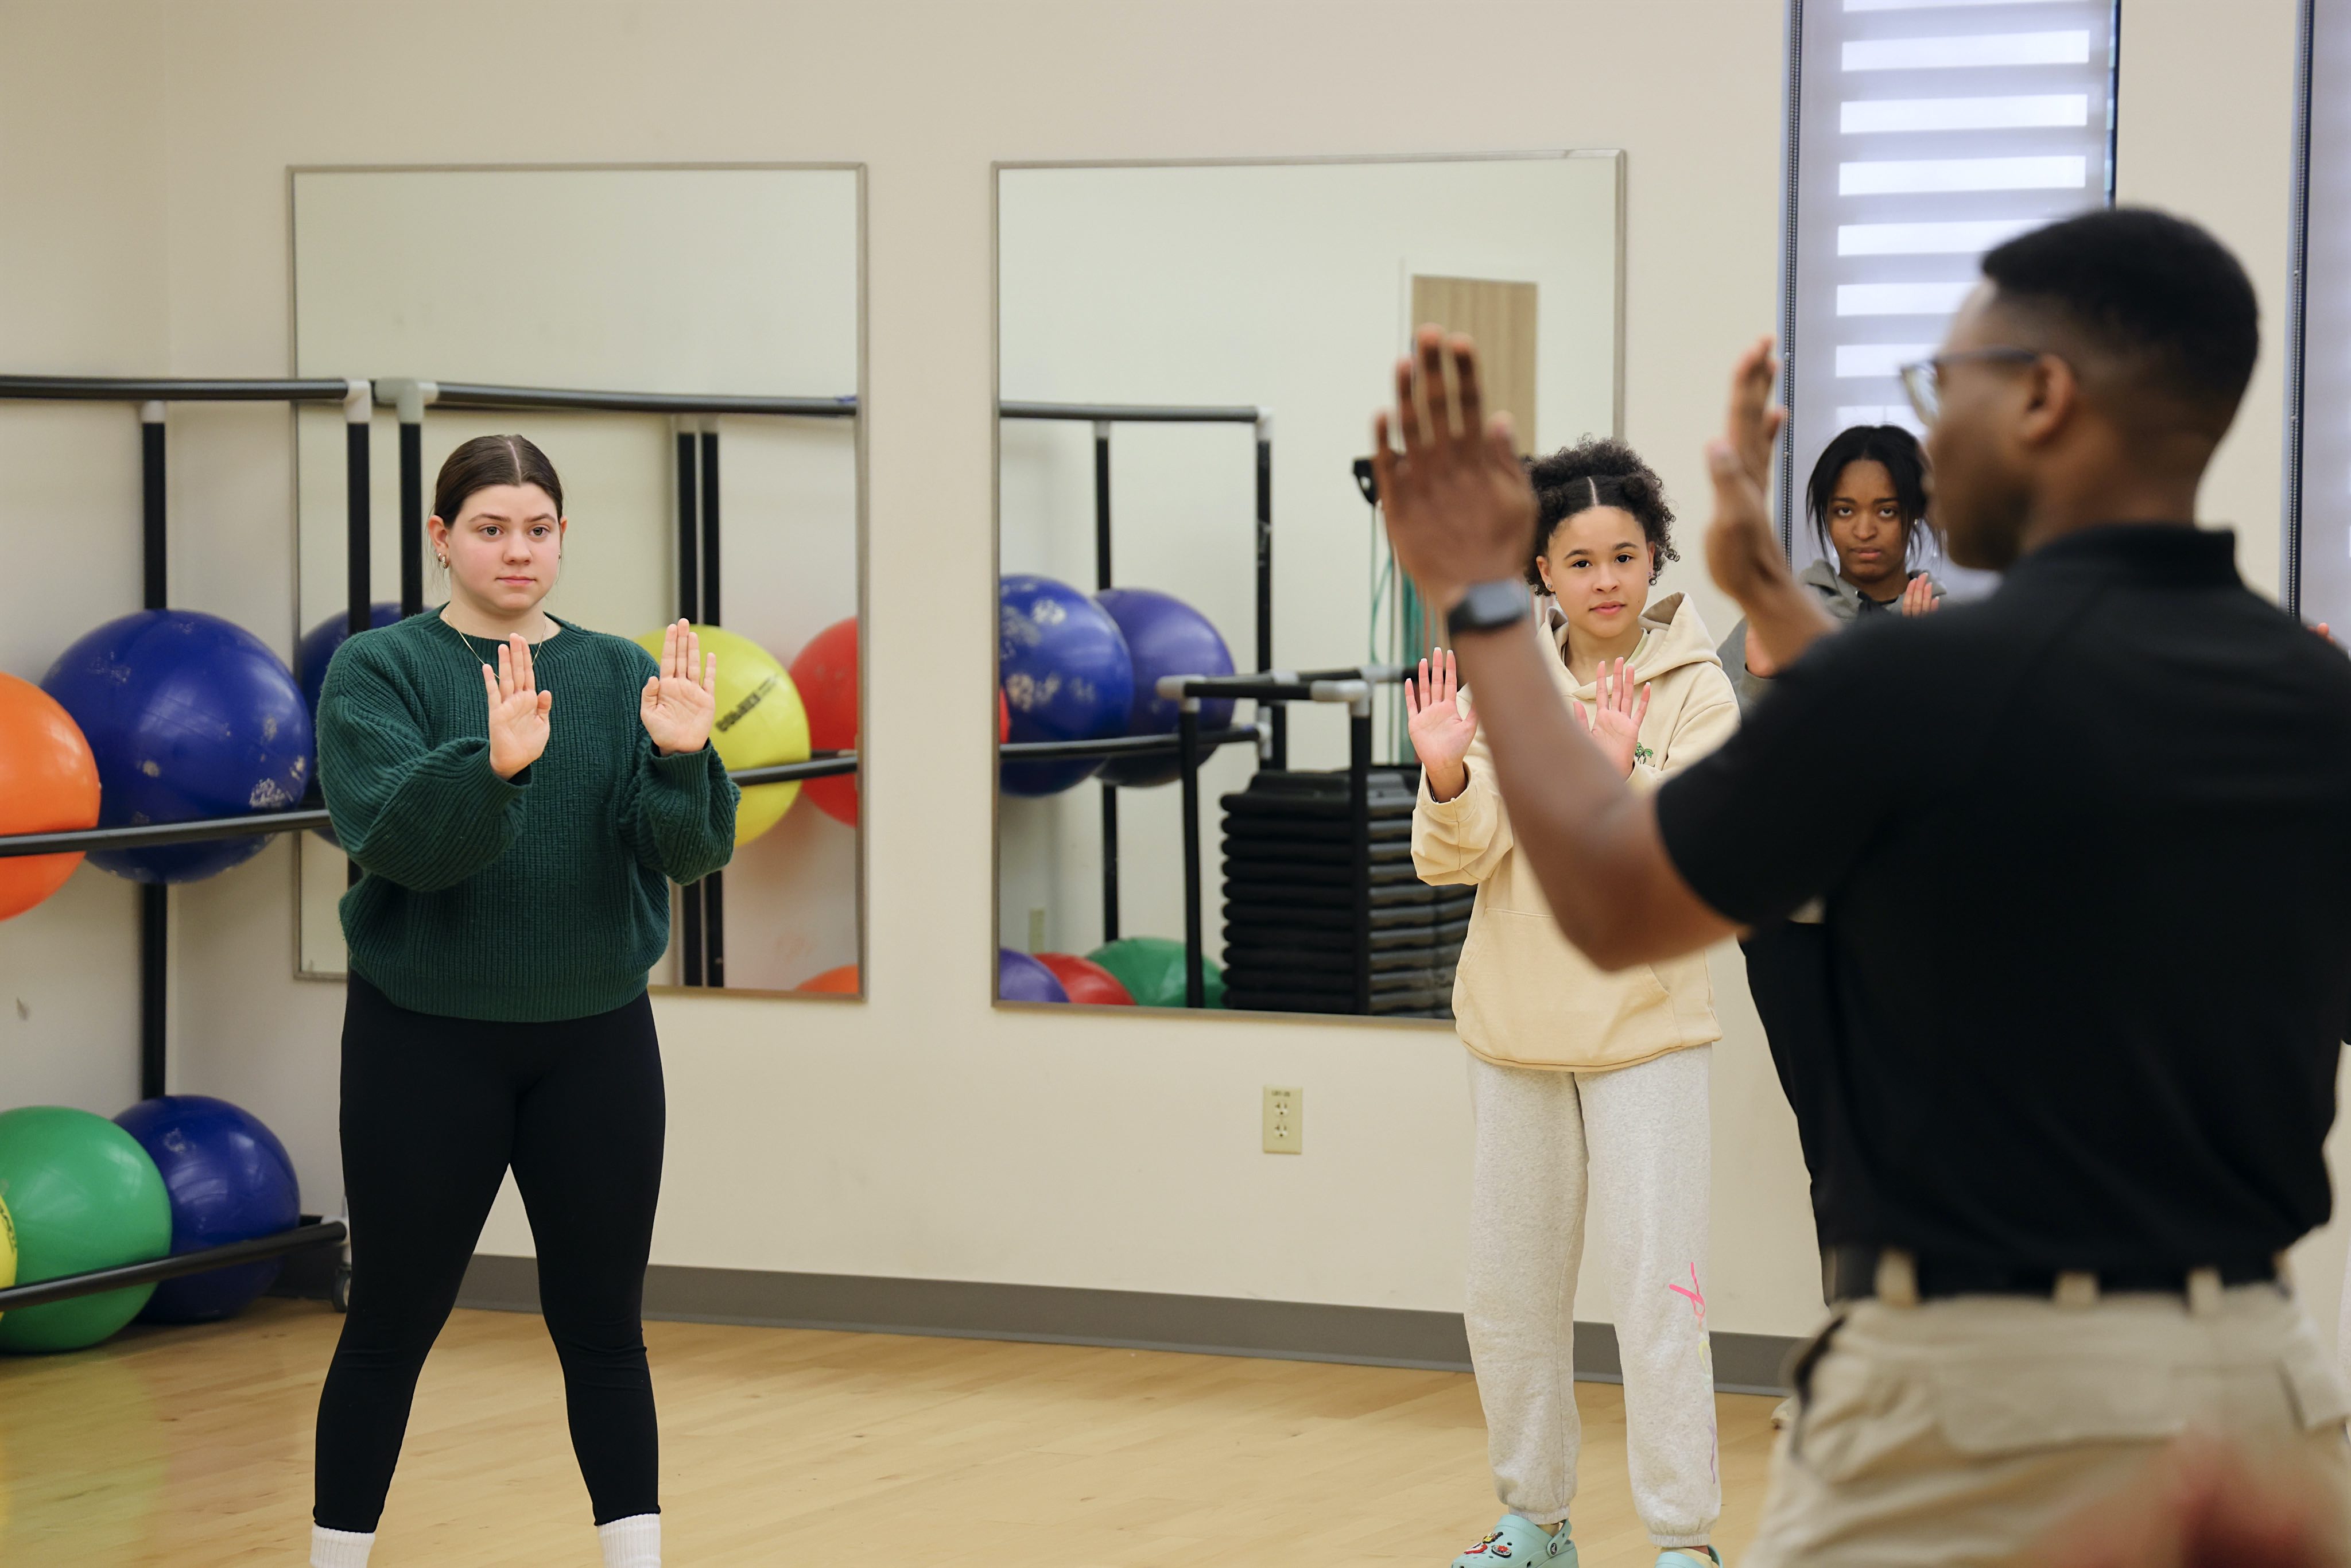 self defense classes taught at cypress